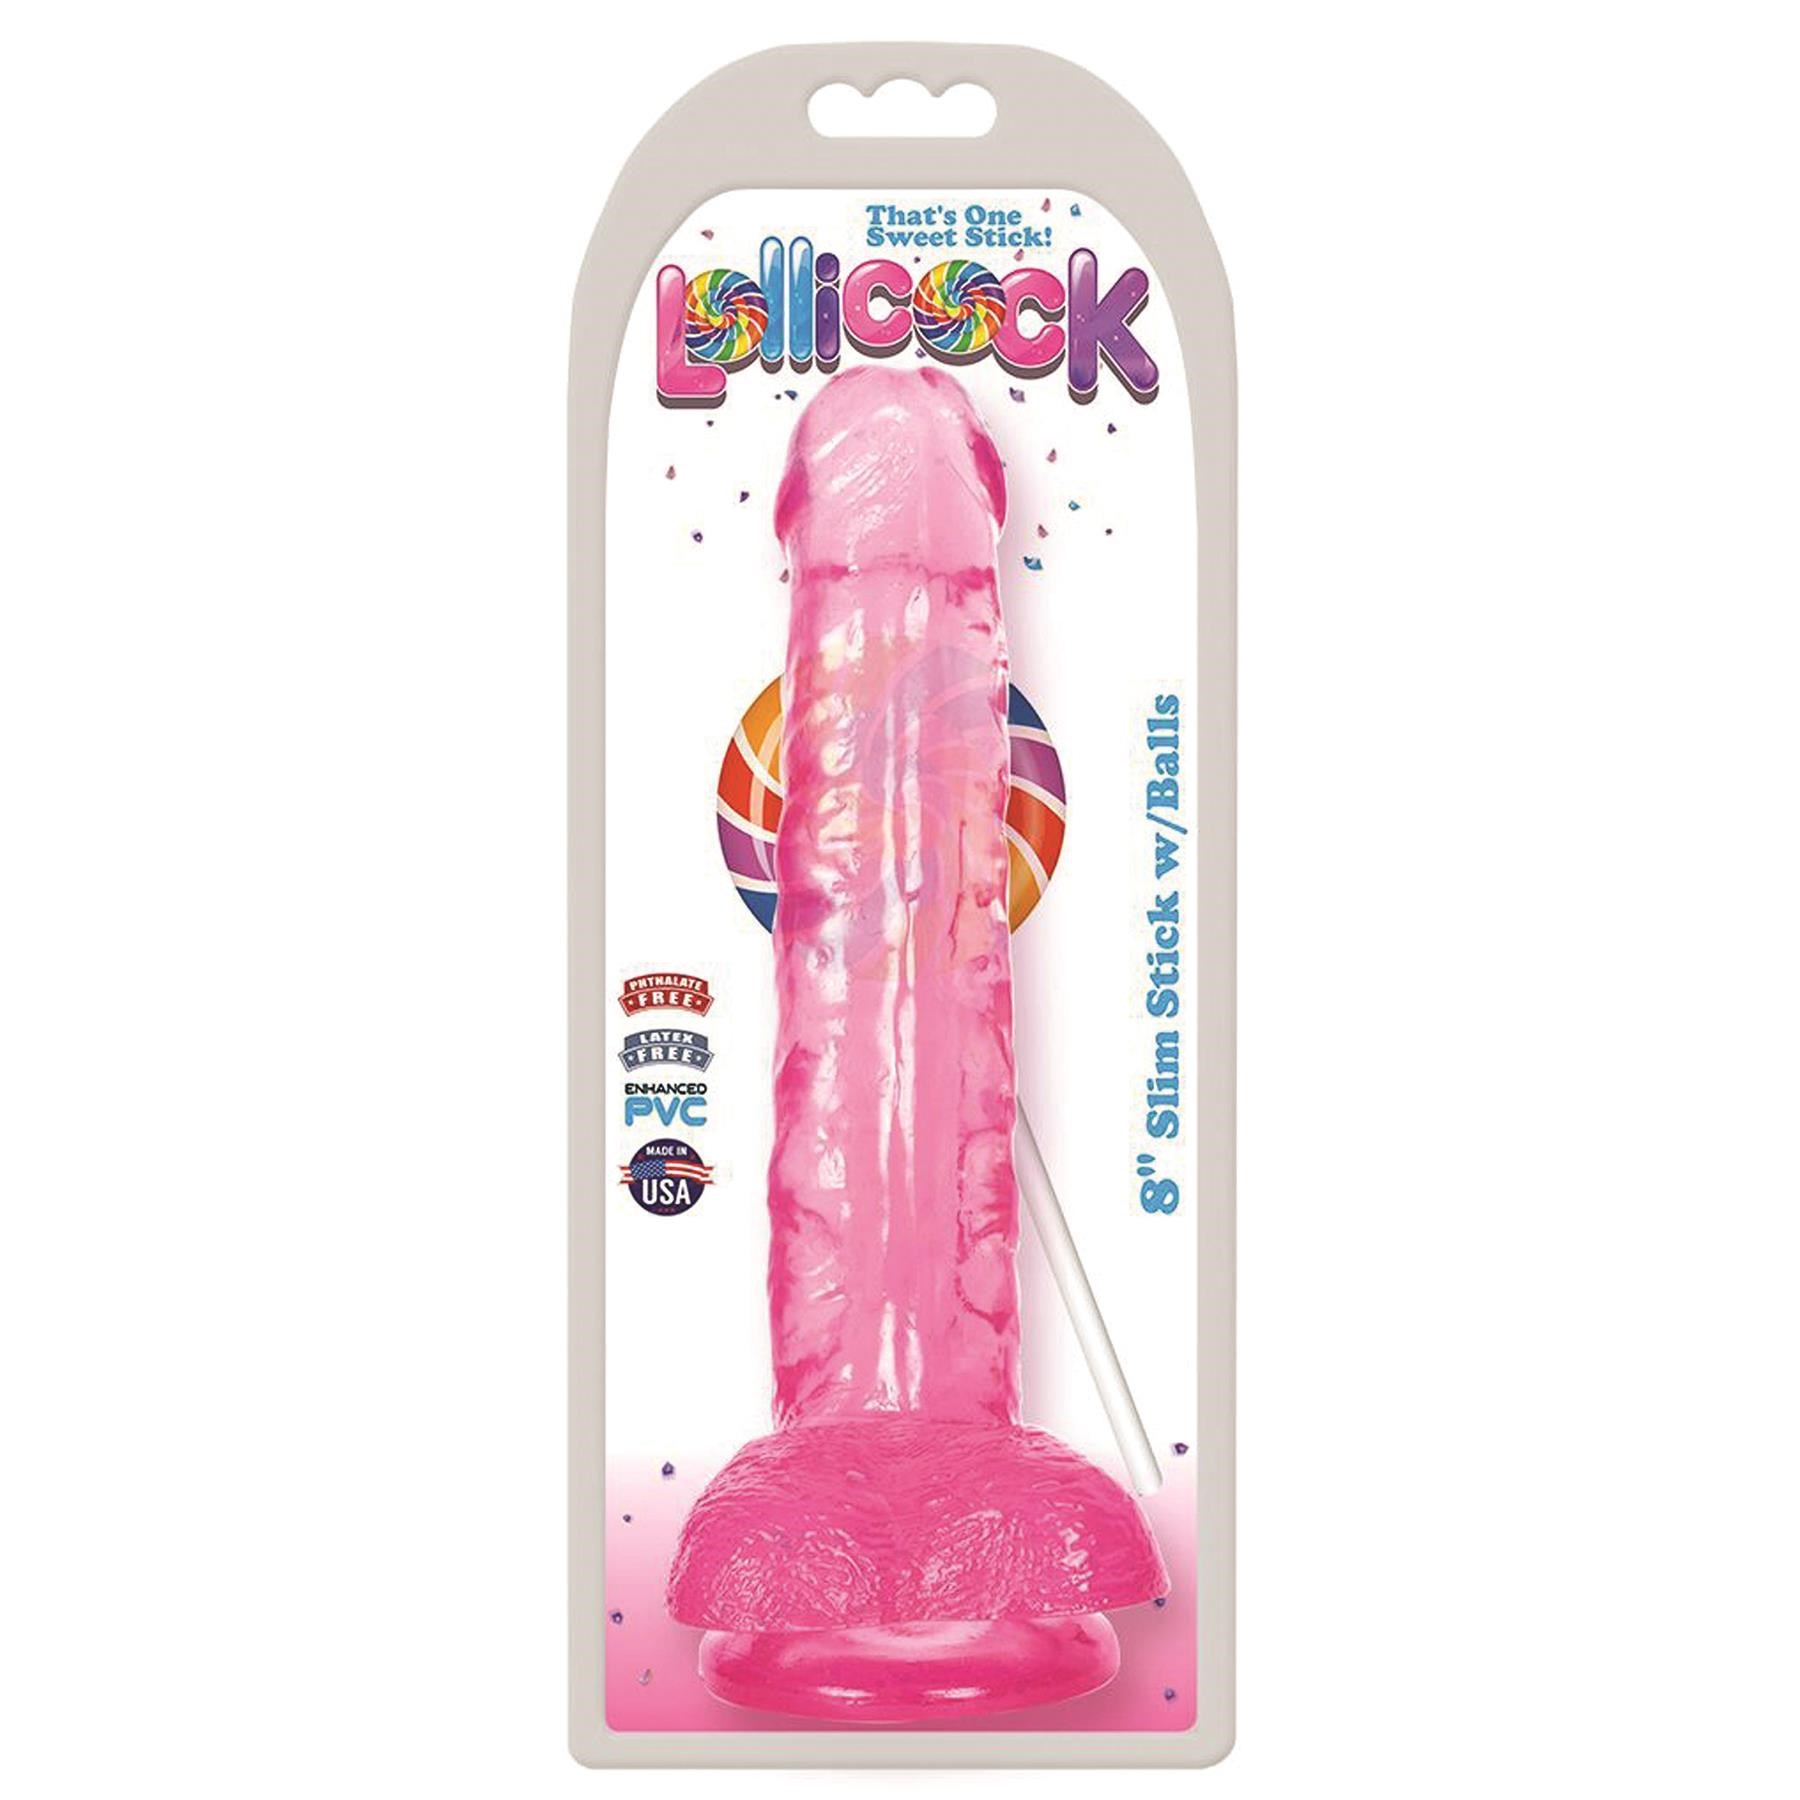 Lollicock 8-Inch Slim Stick Dildo Package Shot - Pink